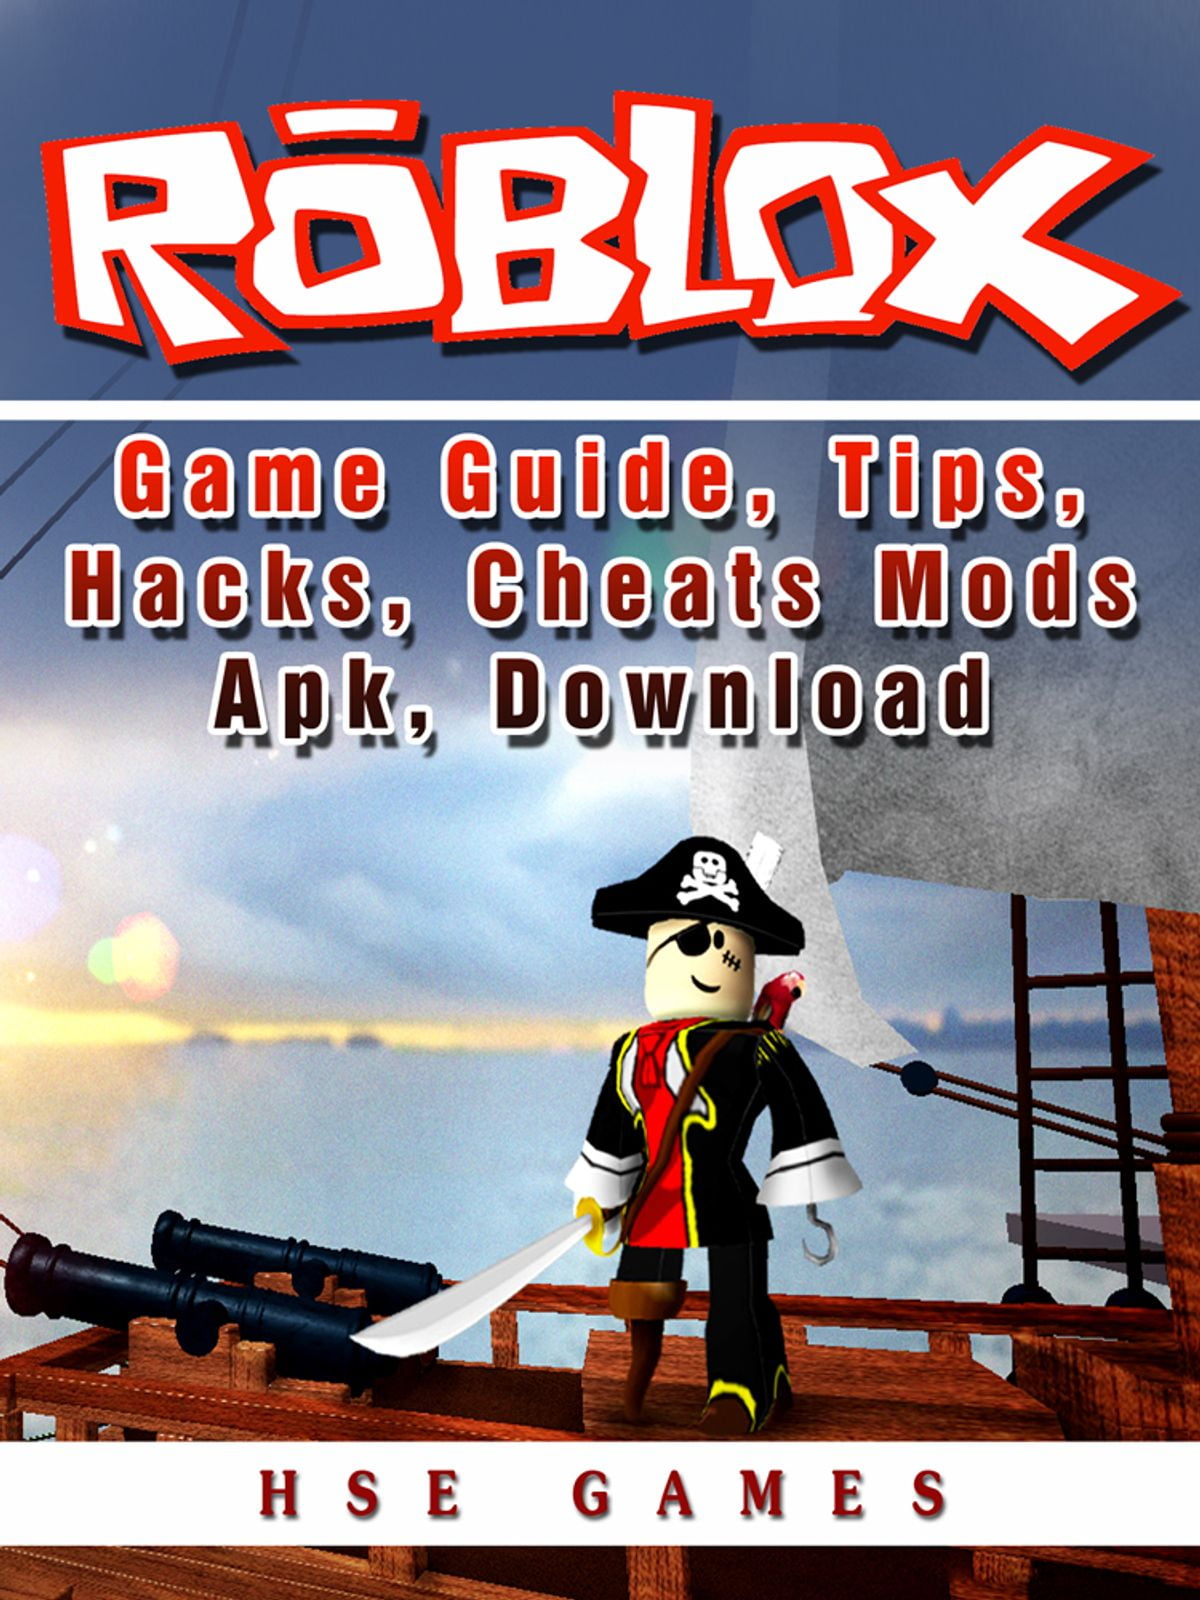 Roblox Game Guide Tips Hacks Cheats Mods Apk Download Ebook Walmart Com Walmart Com - hot roblox high school 2 images for android apk download